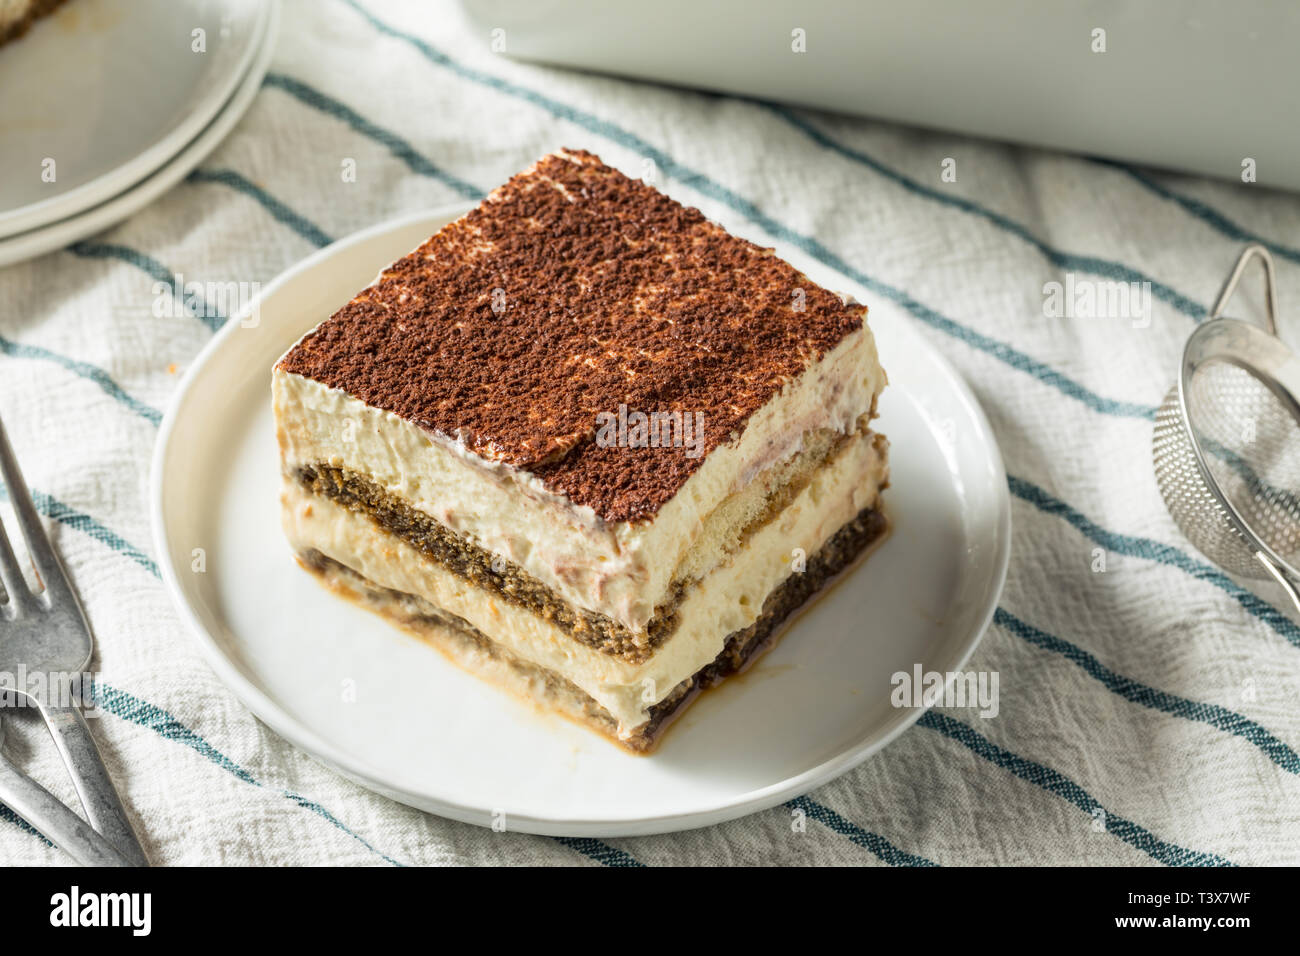 Sweet Dessert Tiramisu italien fait maison avec du cacao en poudre Photo  Stock - Alamy